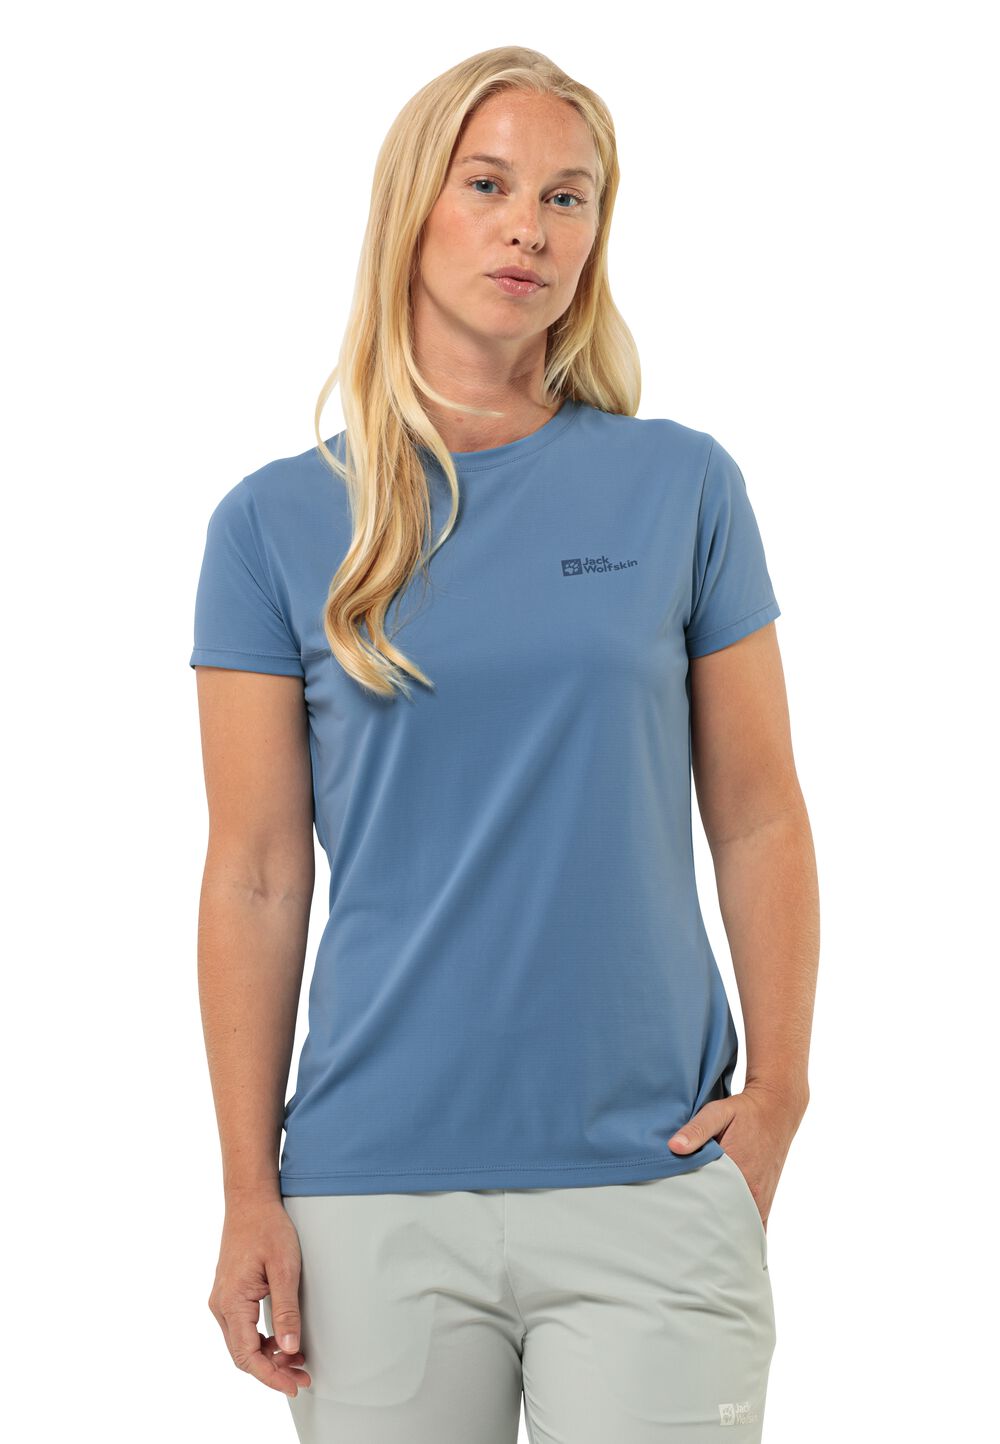 Jack Wolfskin Prelight Trail T-Shirt Women Functioneel shirt Dames M elemental blue elemental blue